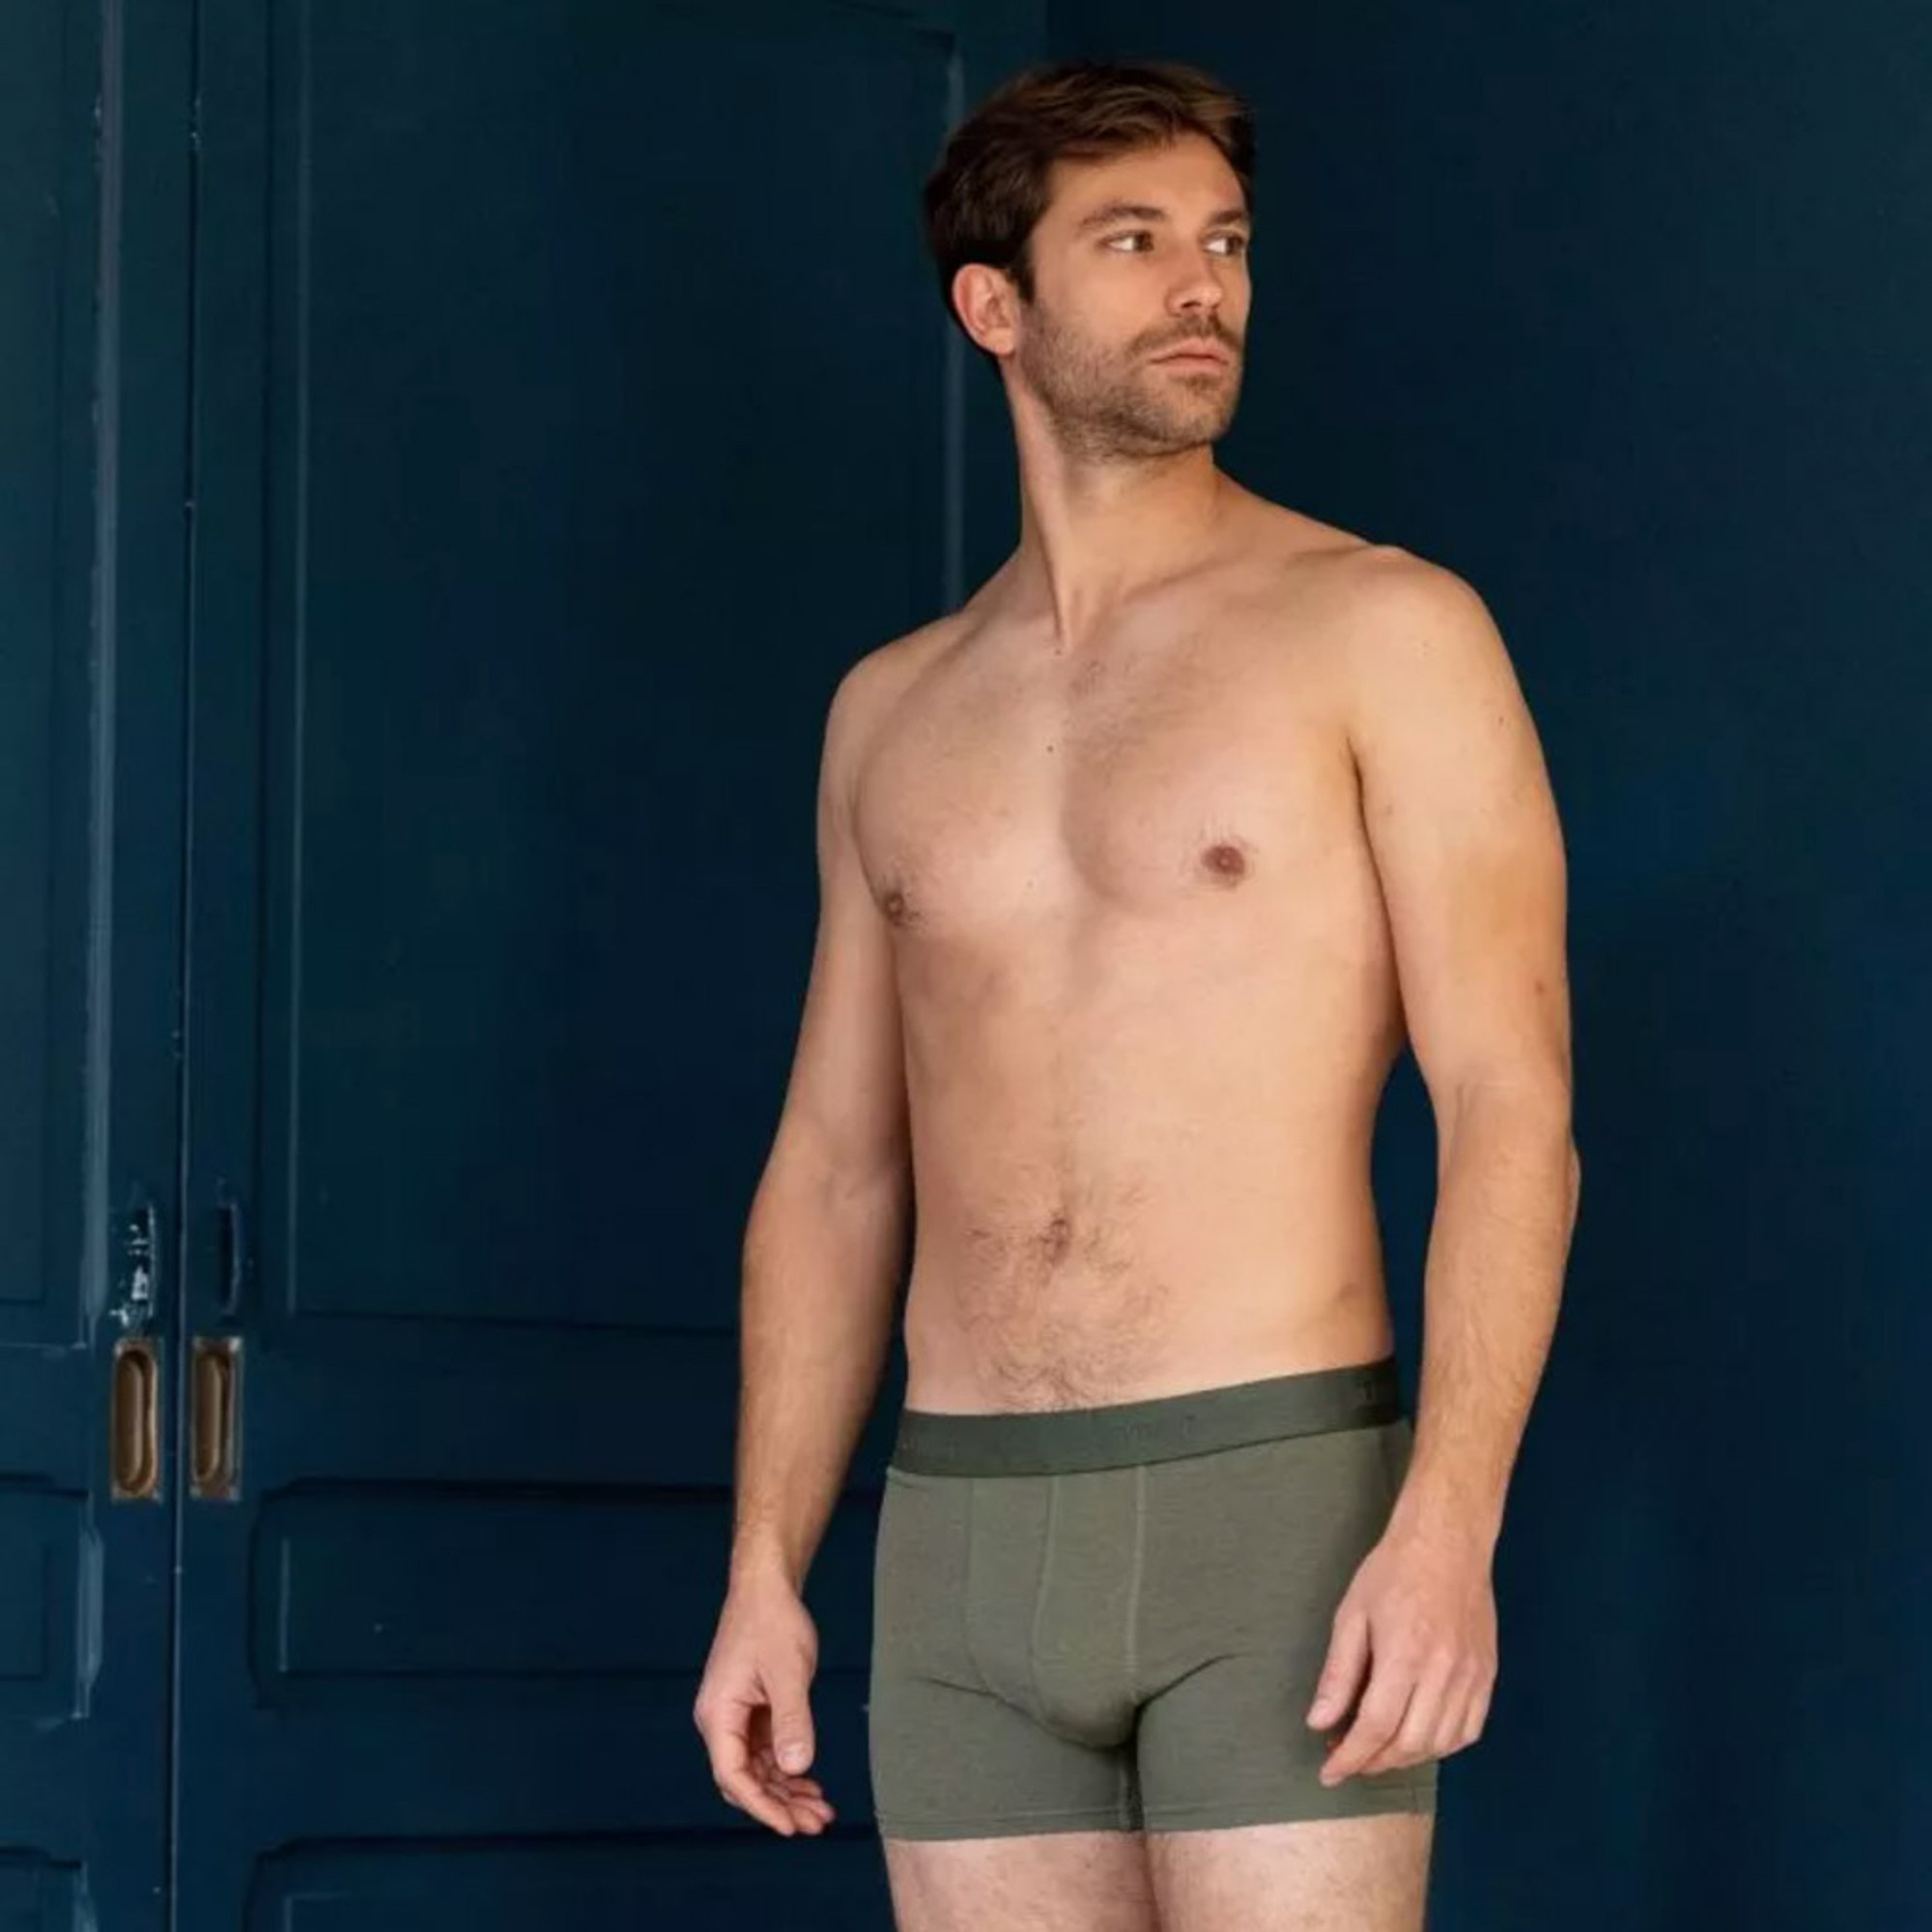 Organic cotton boxer shorts - for men - Polar Bear| BILLYBELT